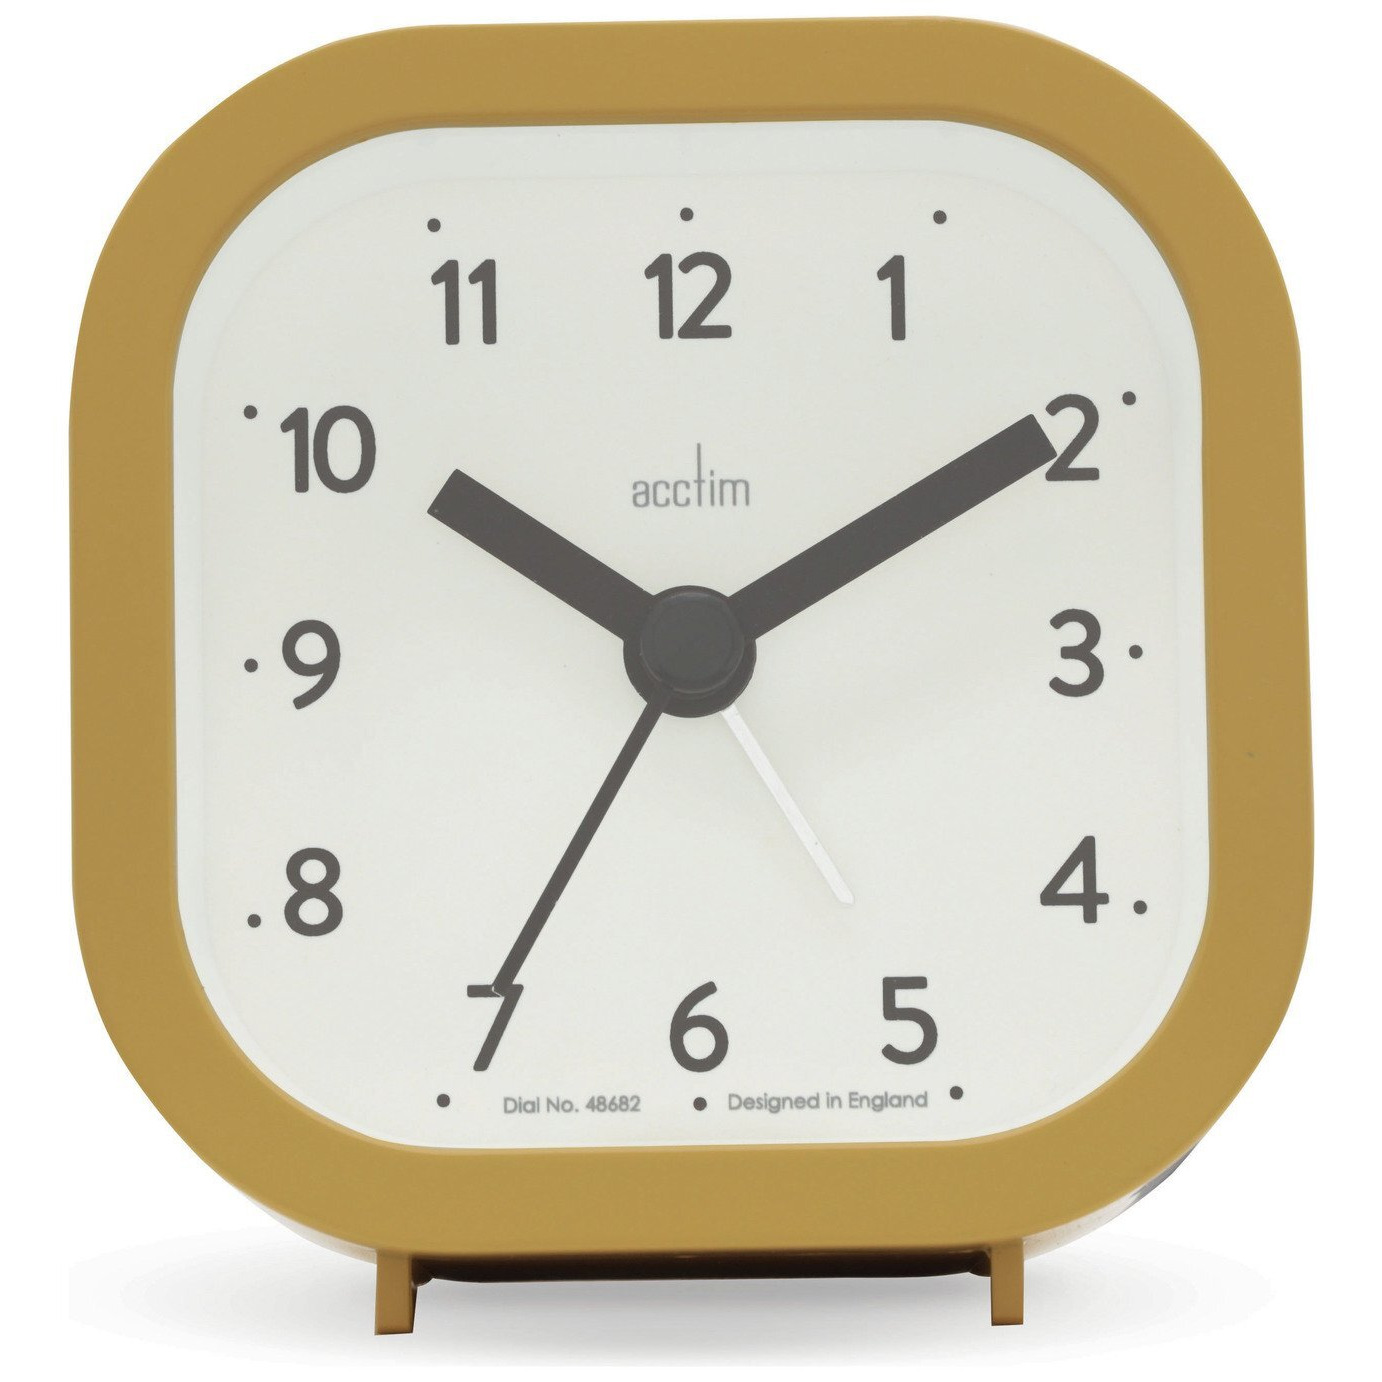 Acctim Remi Analogue Alarm Clock - Mustard - image 1